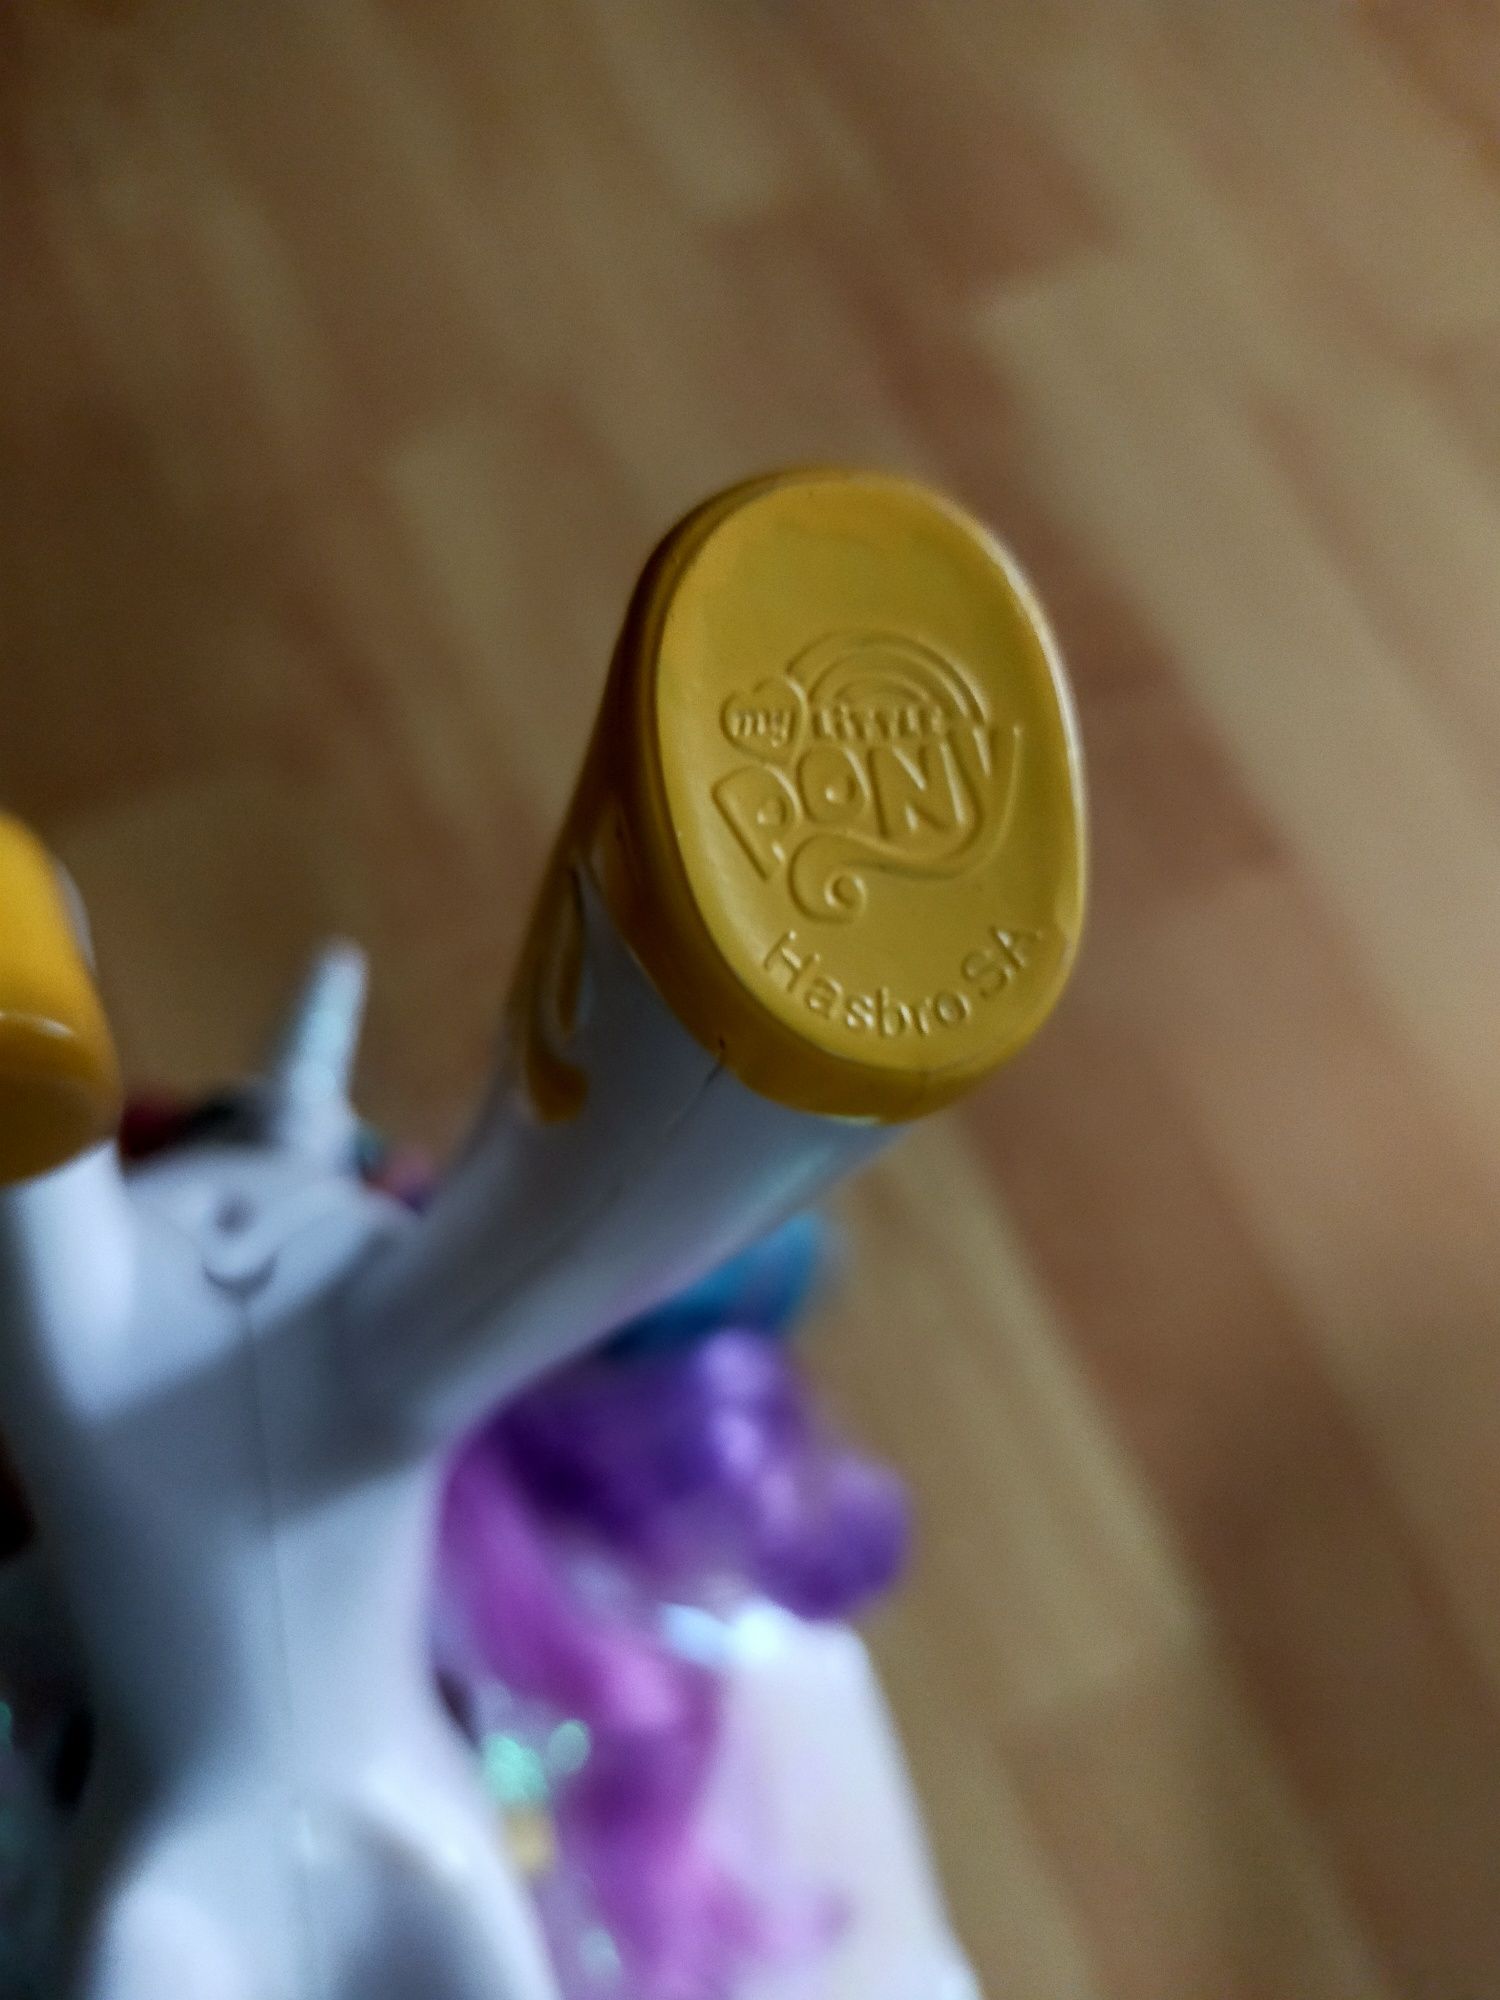 kucyk My little pony Hasbro 22cm interaktywny